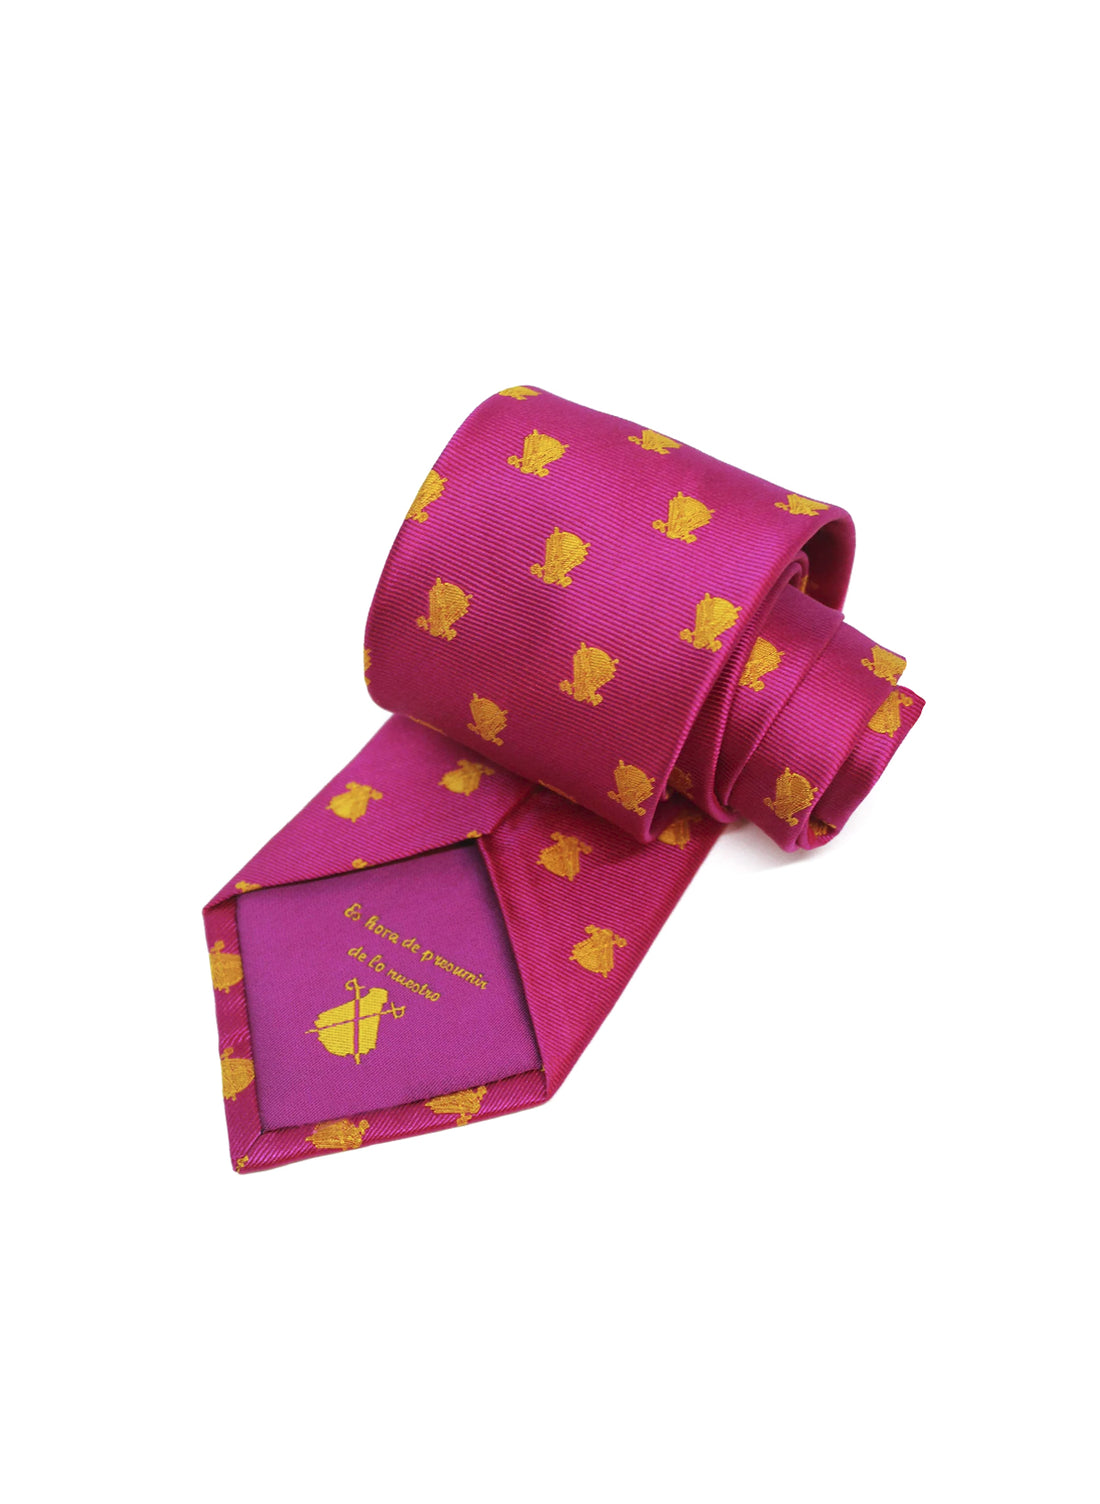 Corbata Rosa Capotes Amarillos